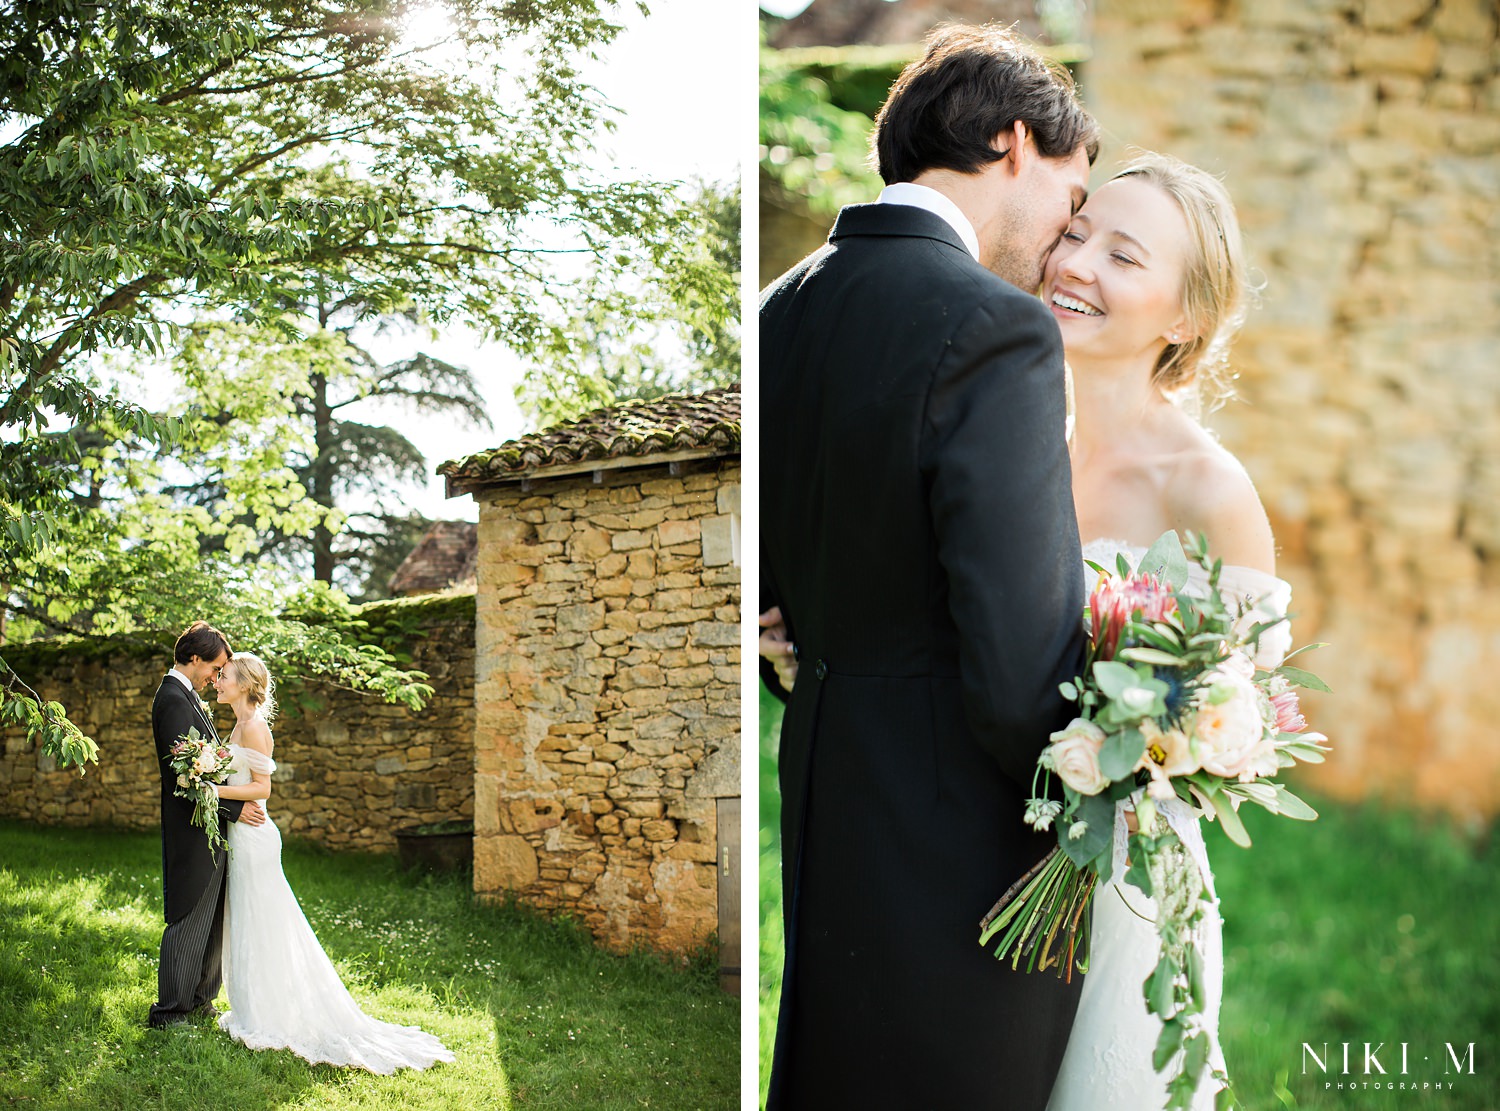 Bride and groom in front of old stone building at Chateau de la Bourlie Dordogne wedding venue